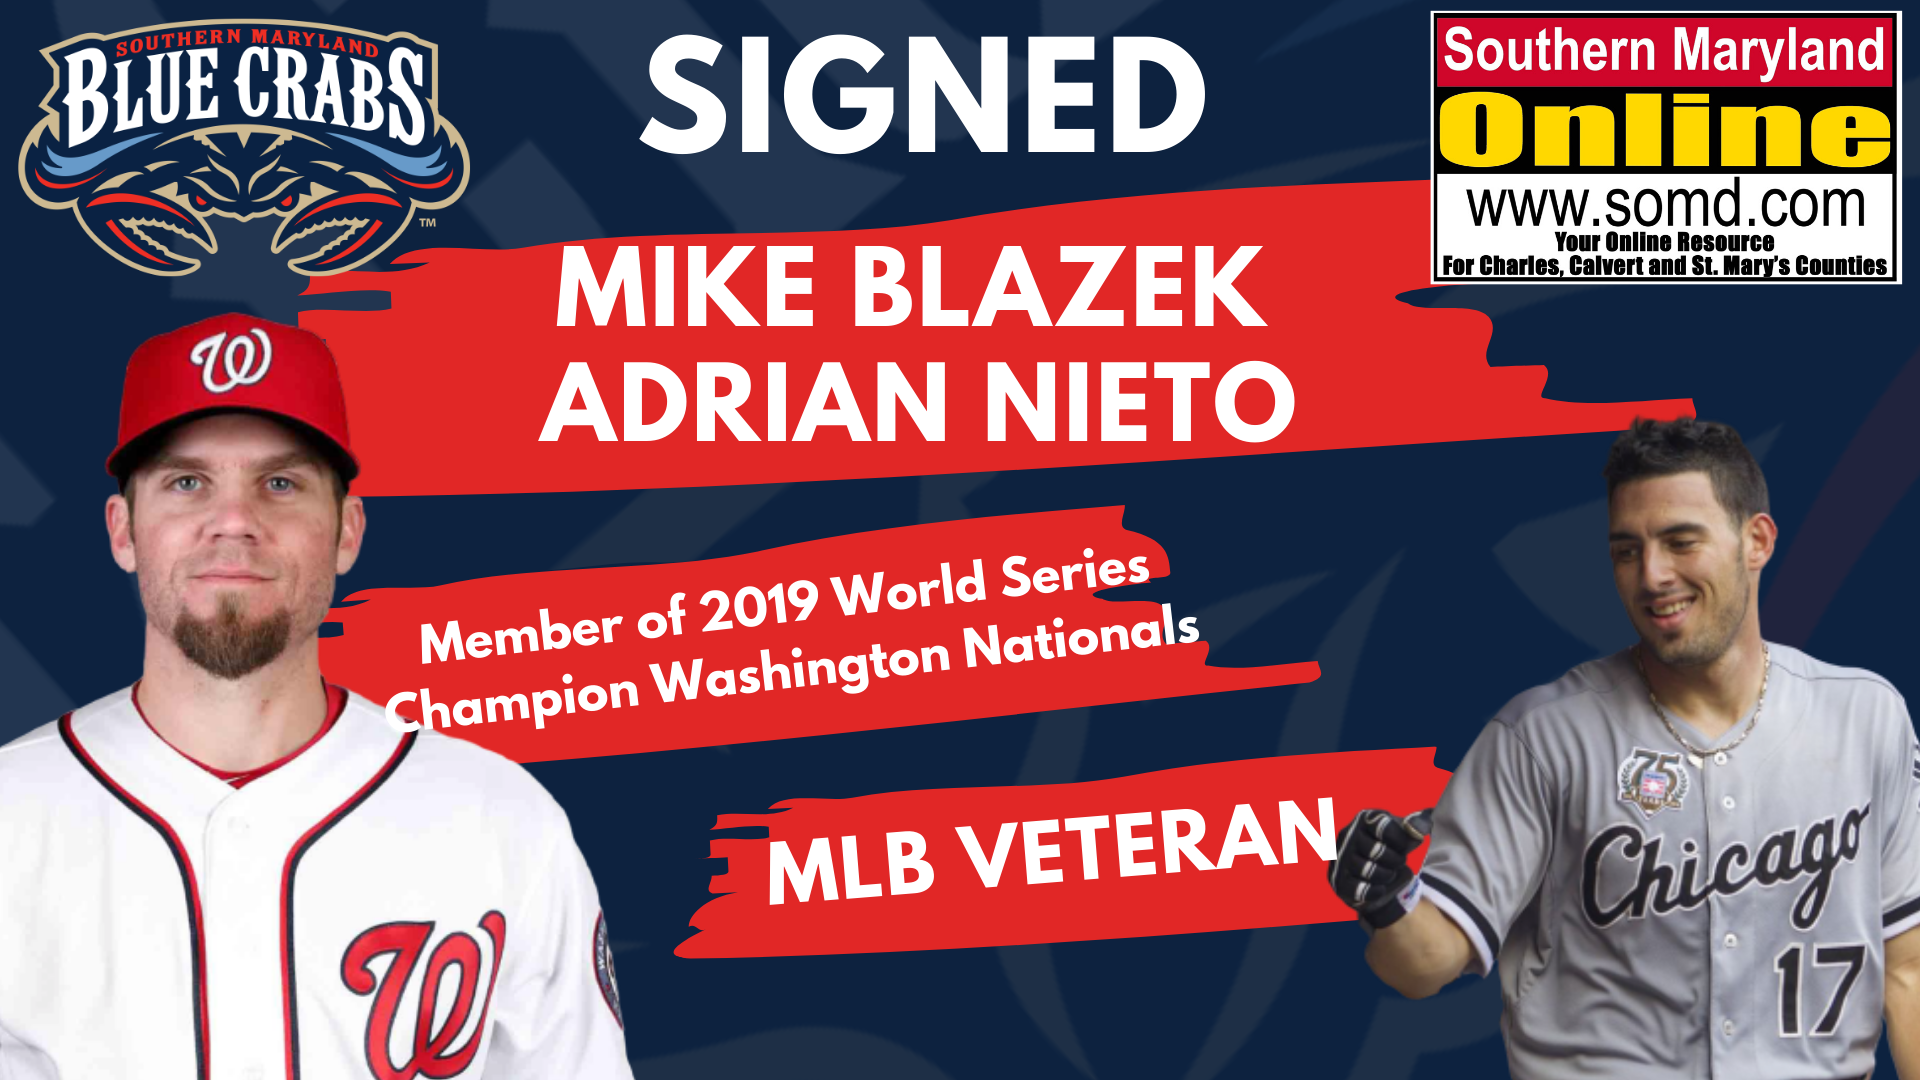 Blue Crabs Sign Member of 2019 World Series Champion Washington Nationals, MLB Veteran